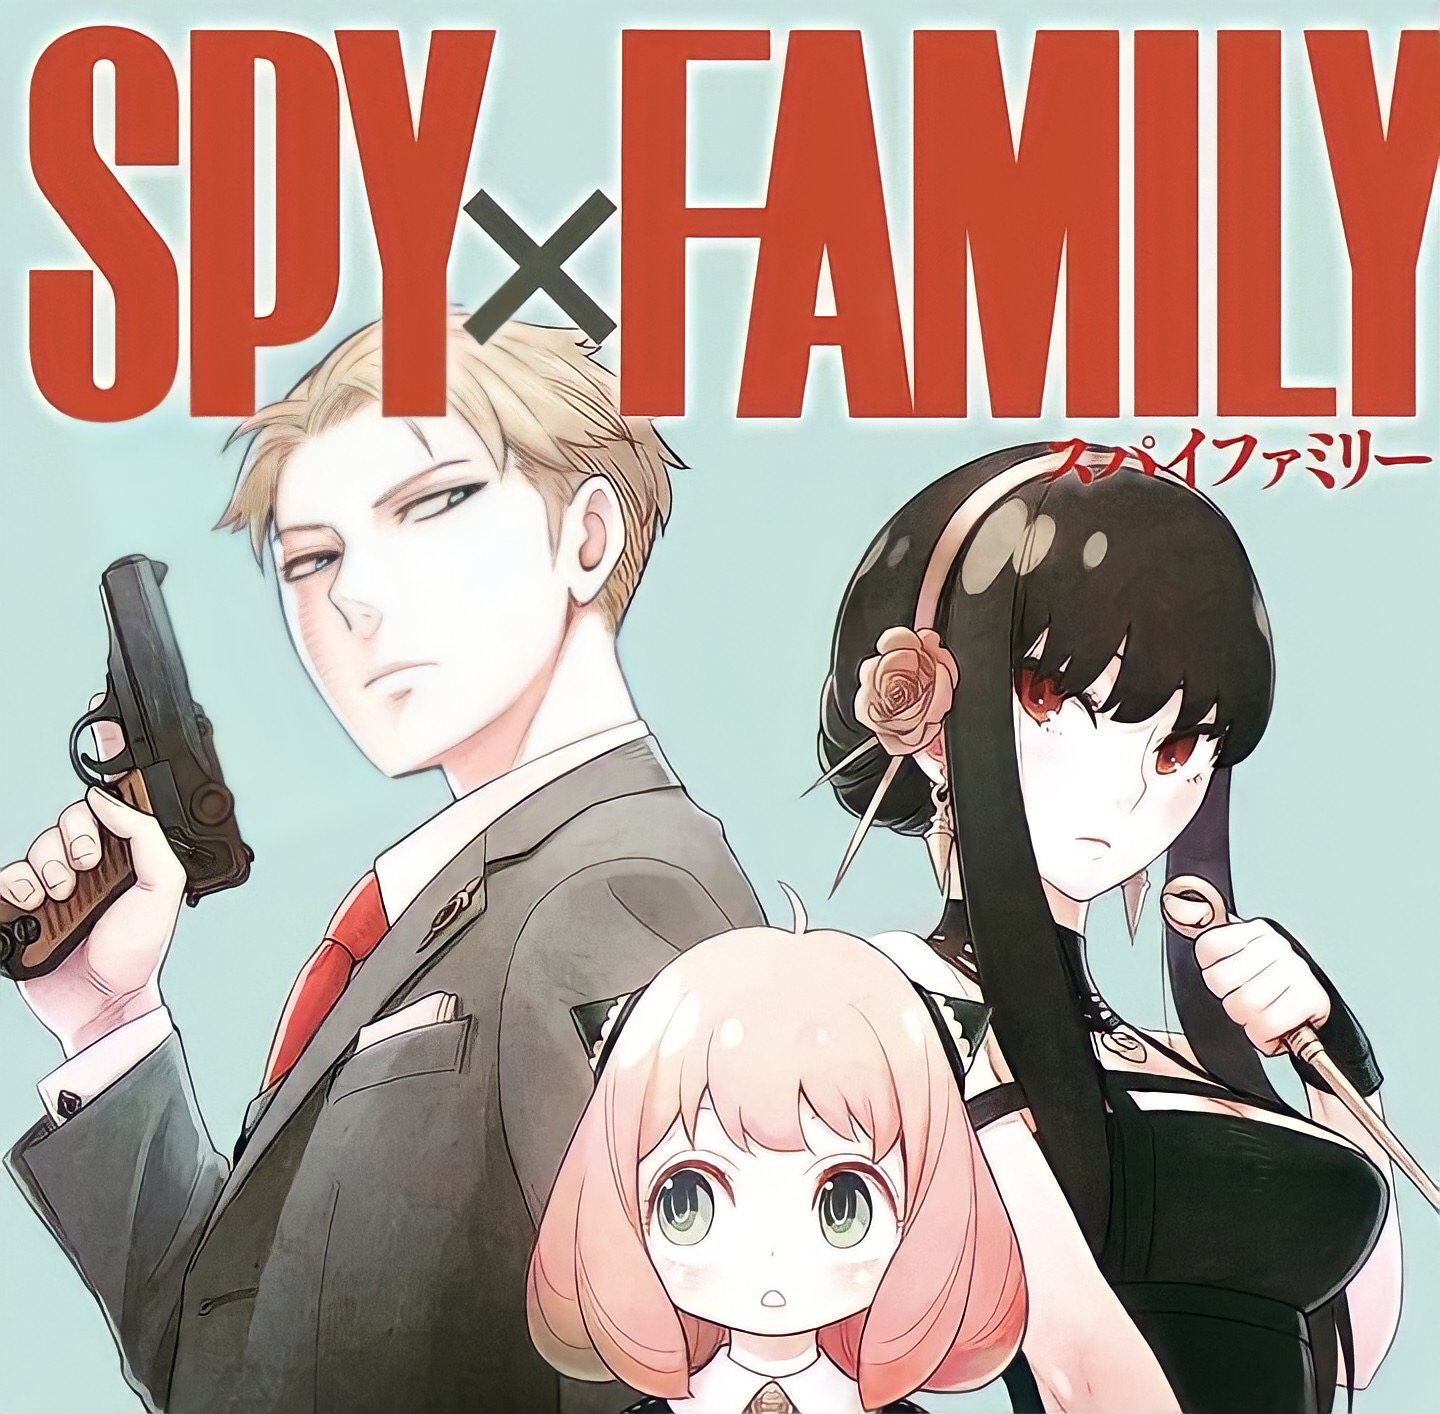 Spy x Family Episode 09 Subtitle Indonesia